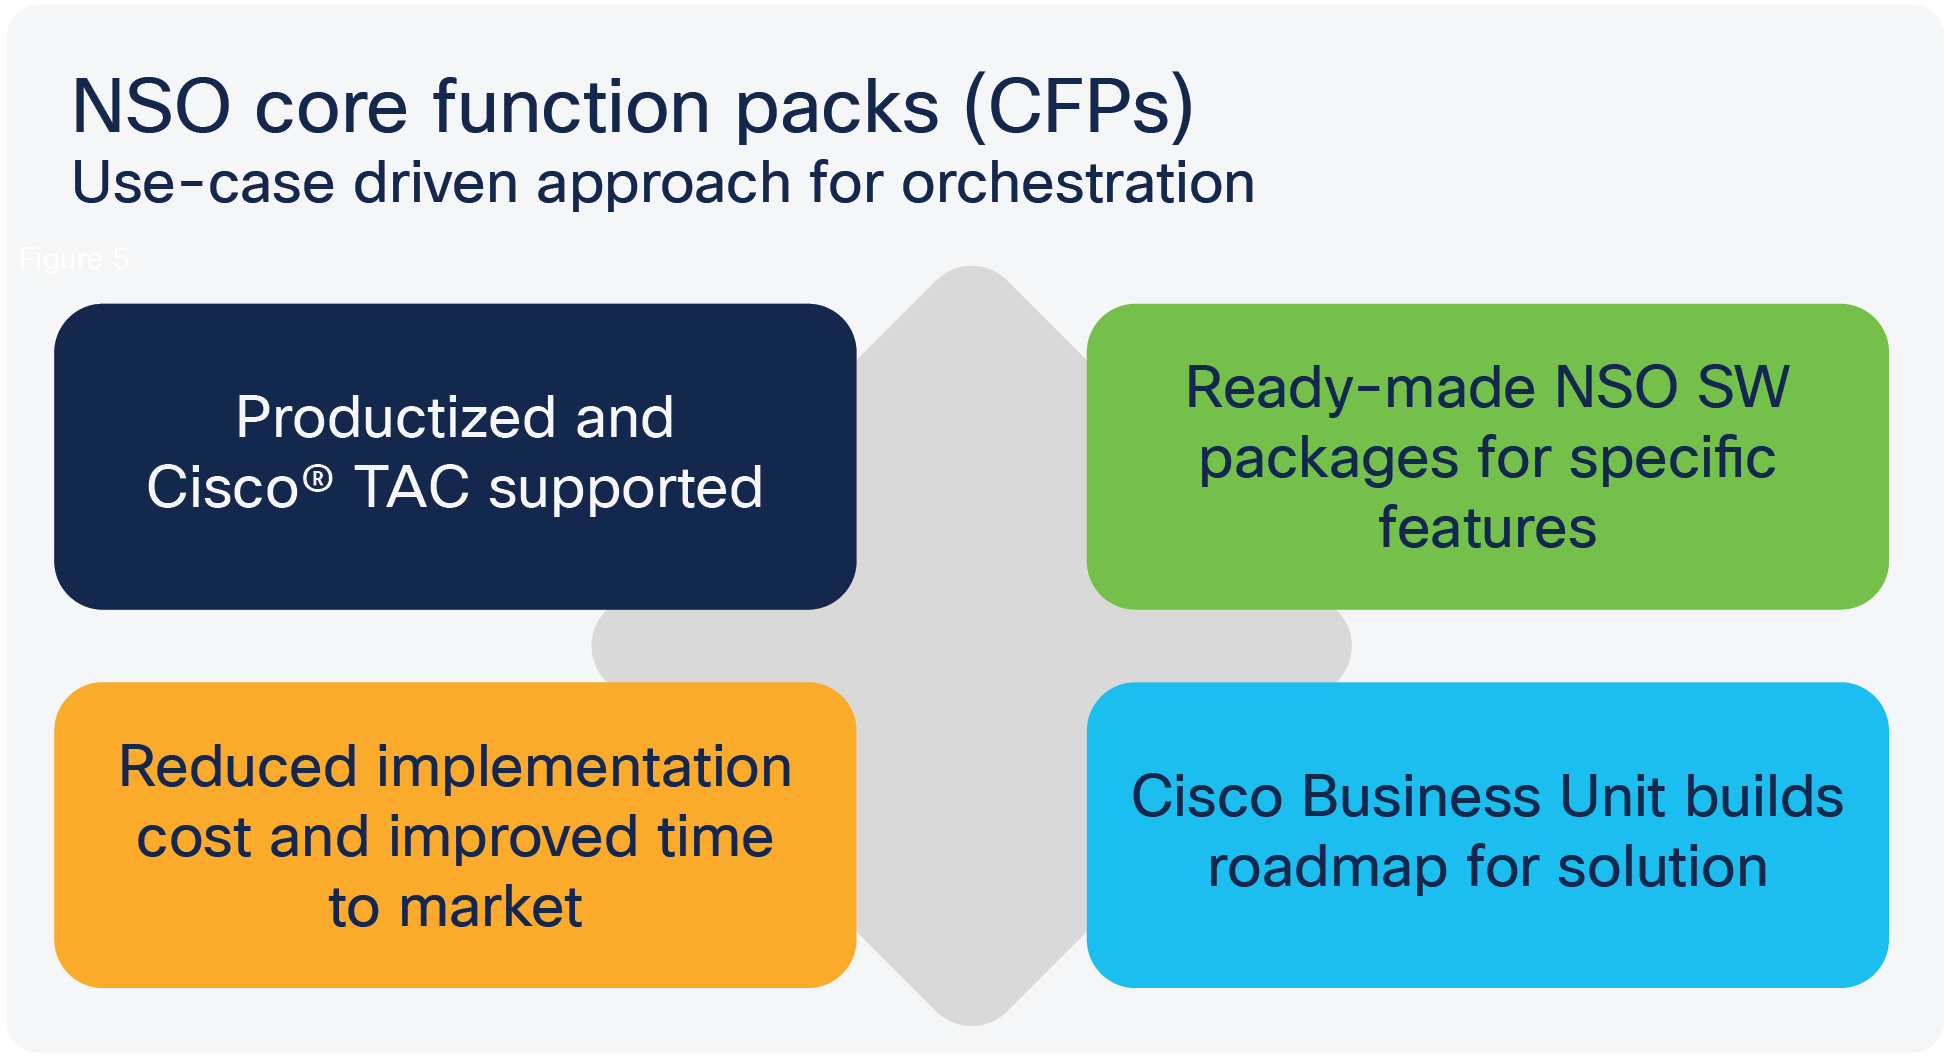 Cross-domain Core Function Pack (CFP) benefits